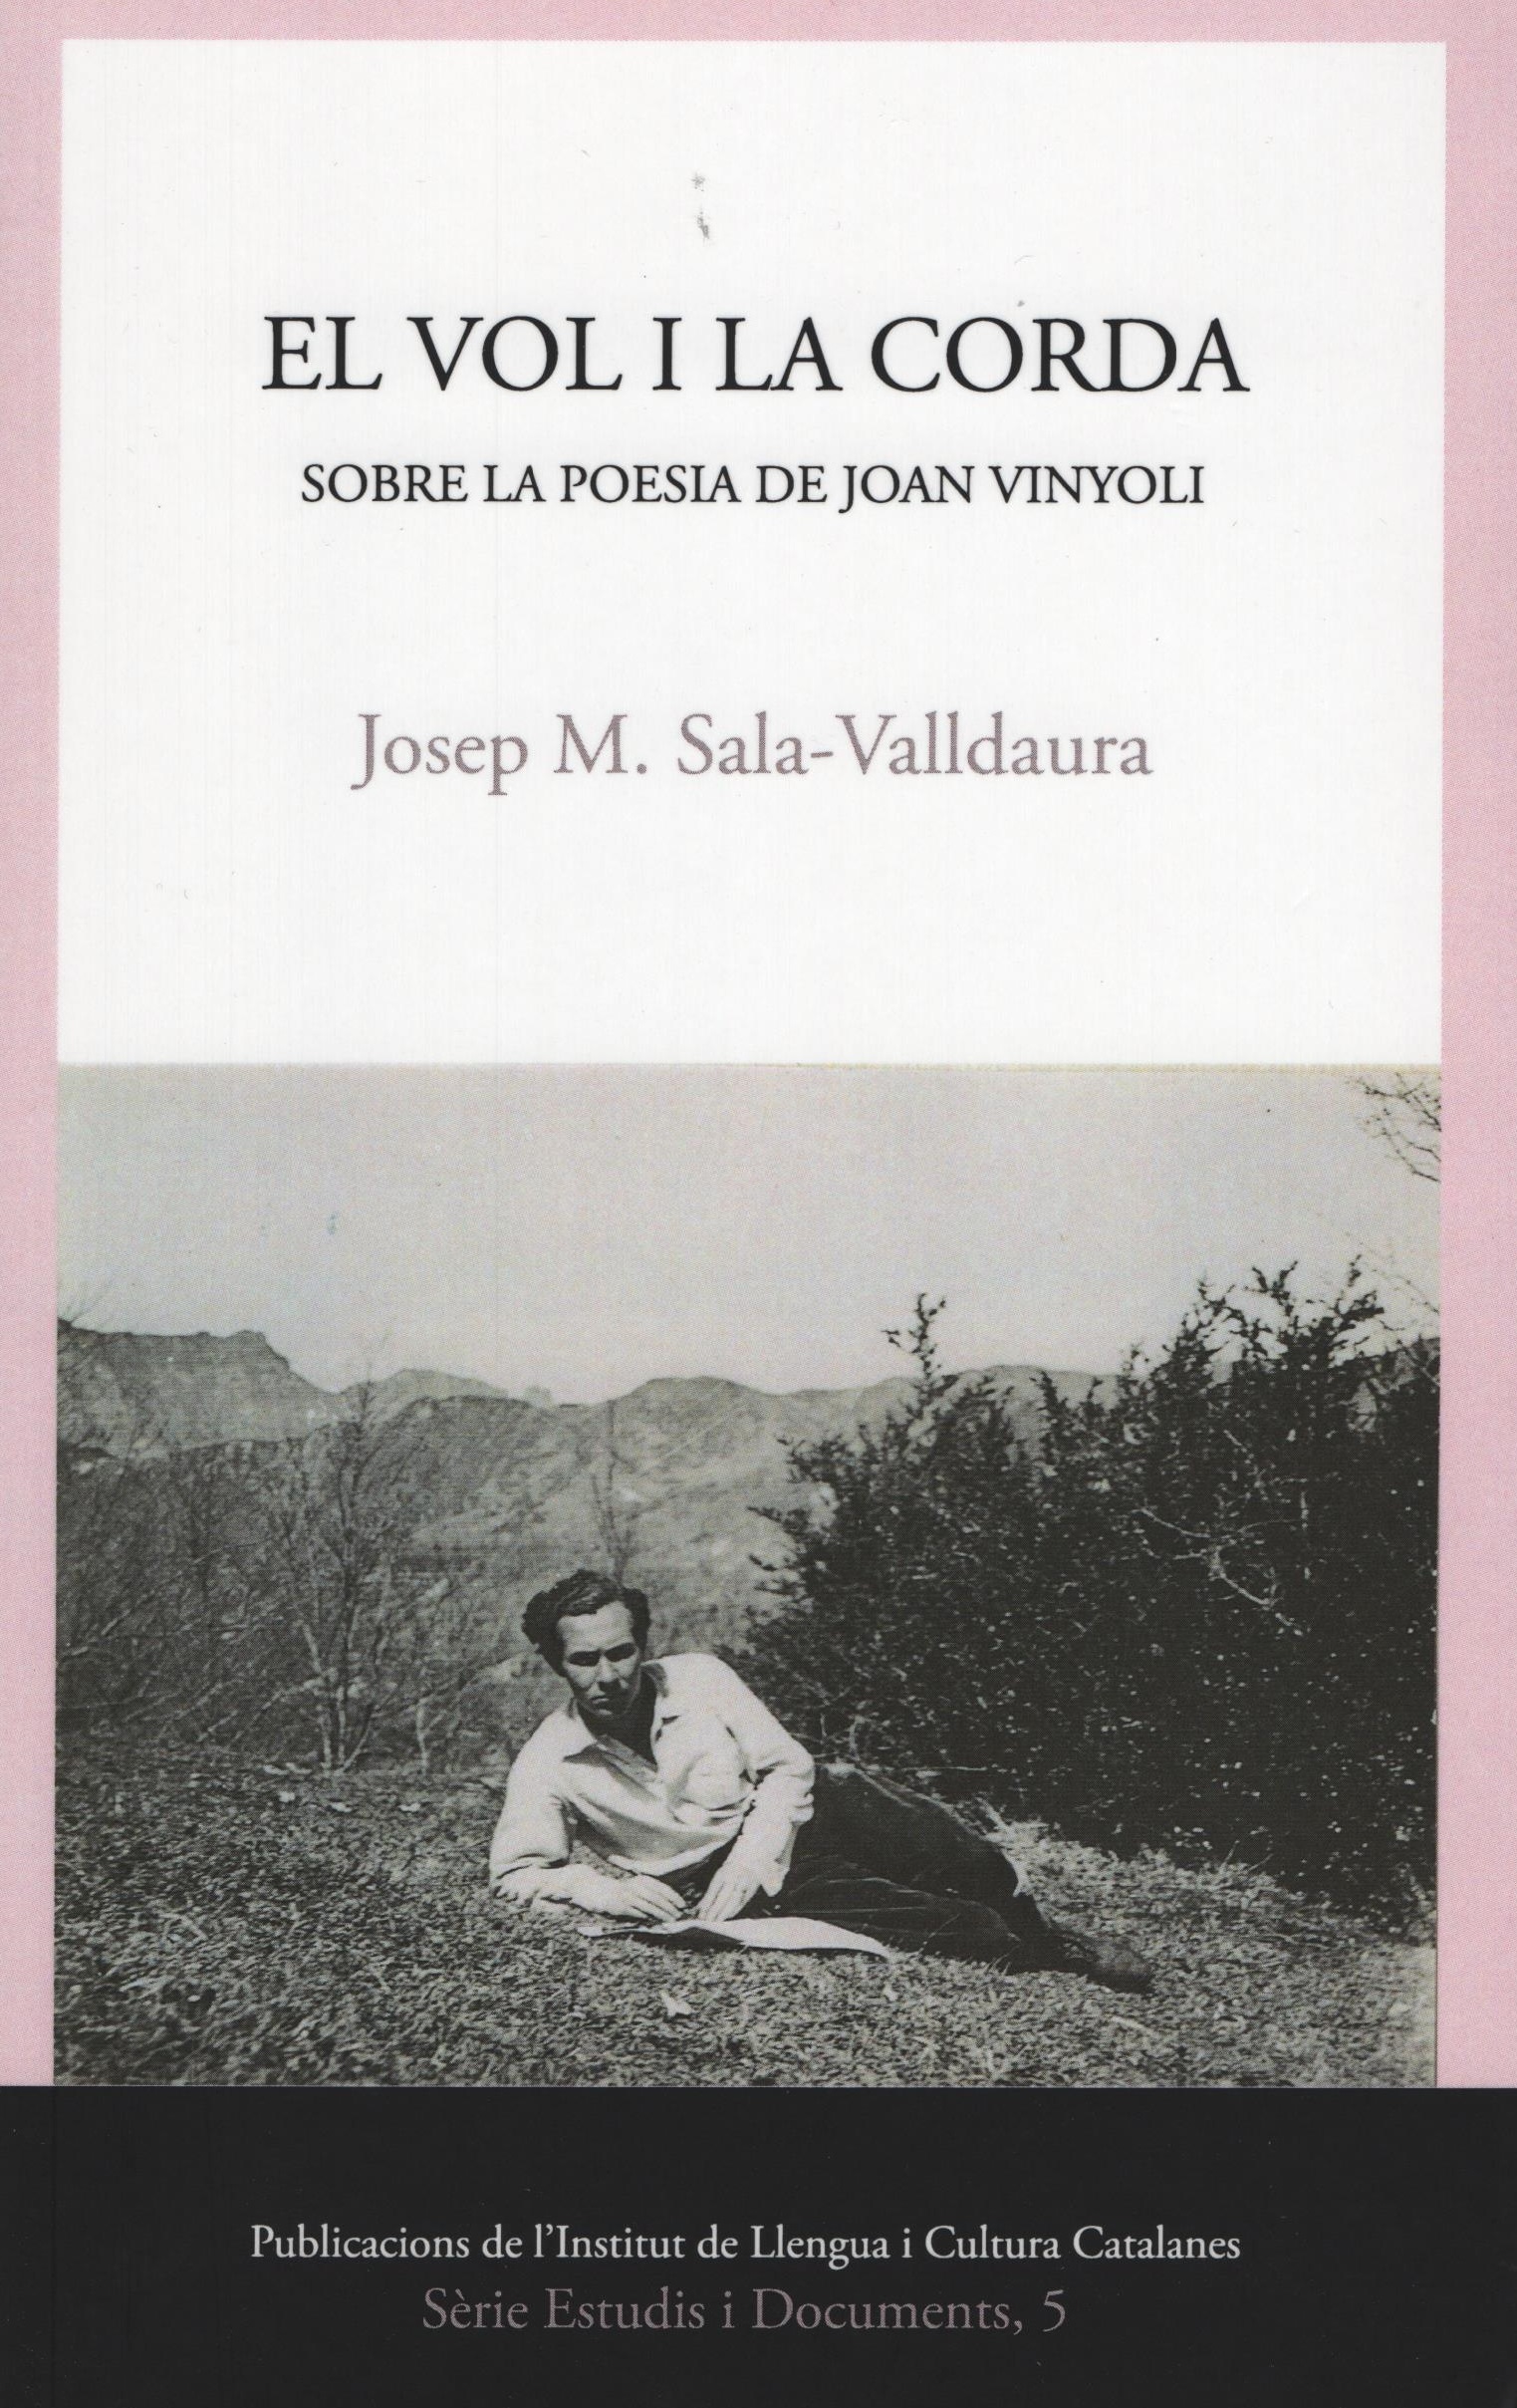 El vol i la corda. Sobre la poesia de Joan Vinyoli.